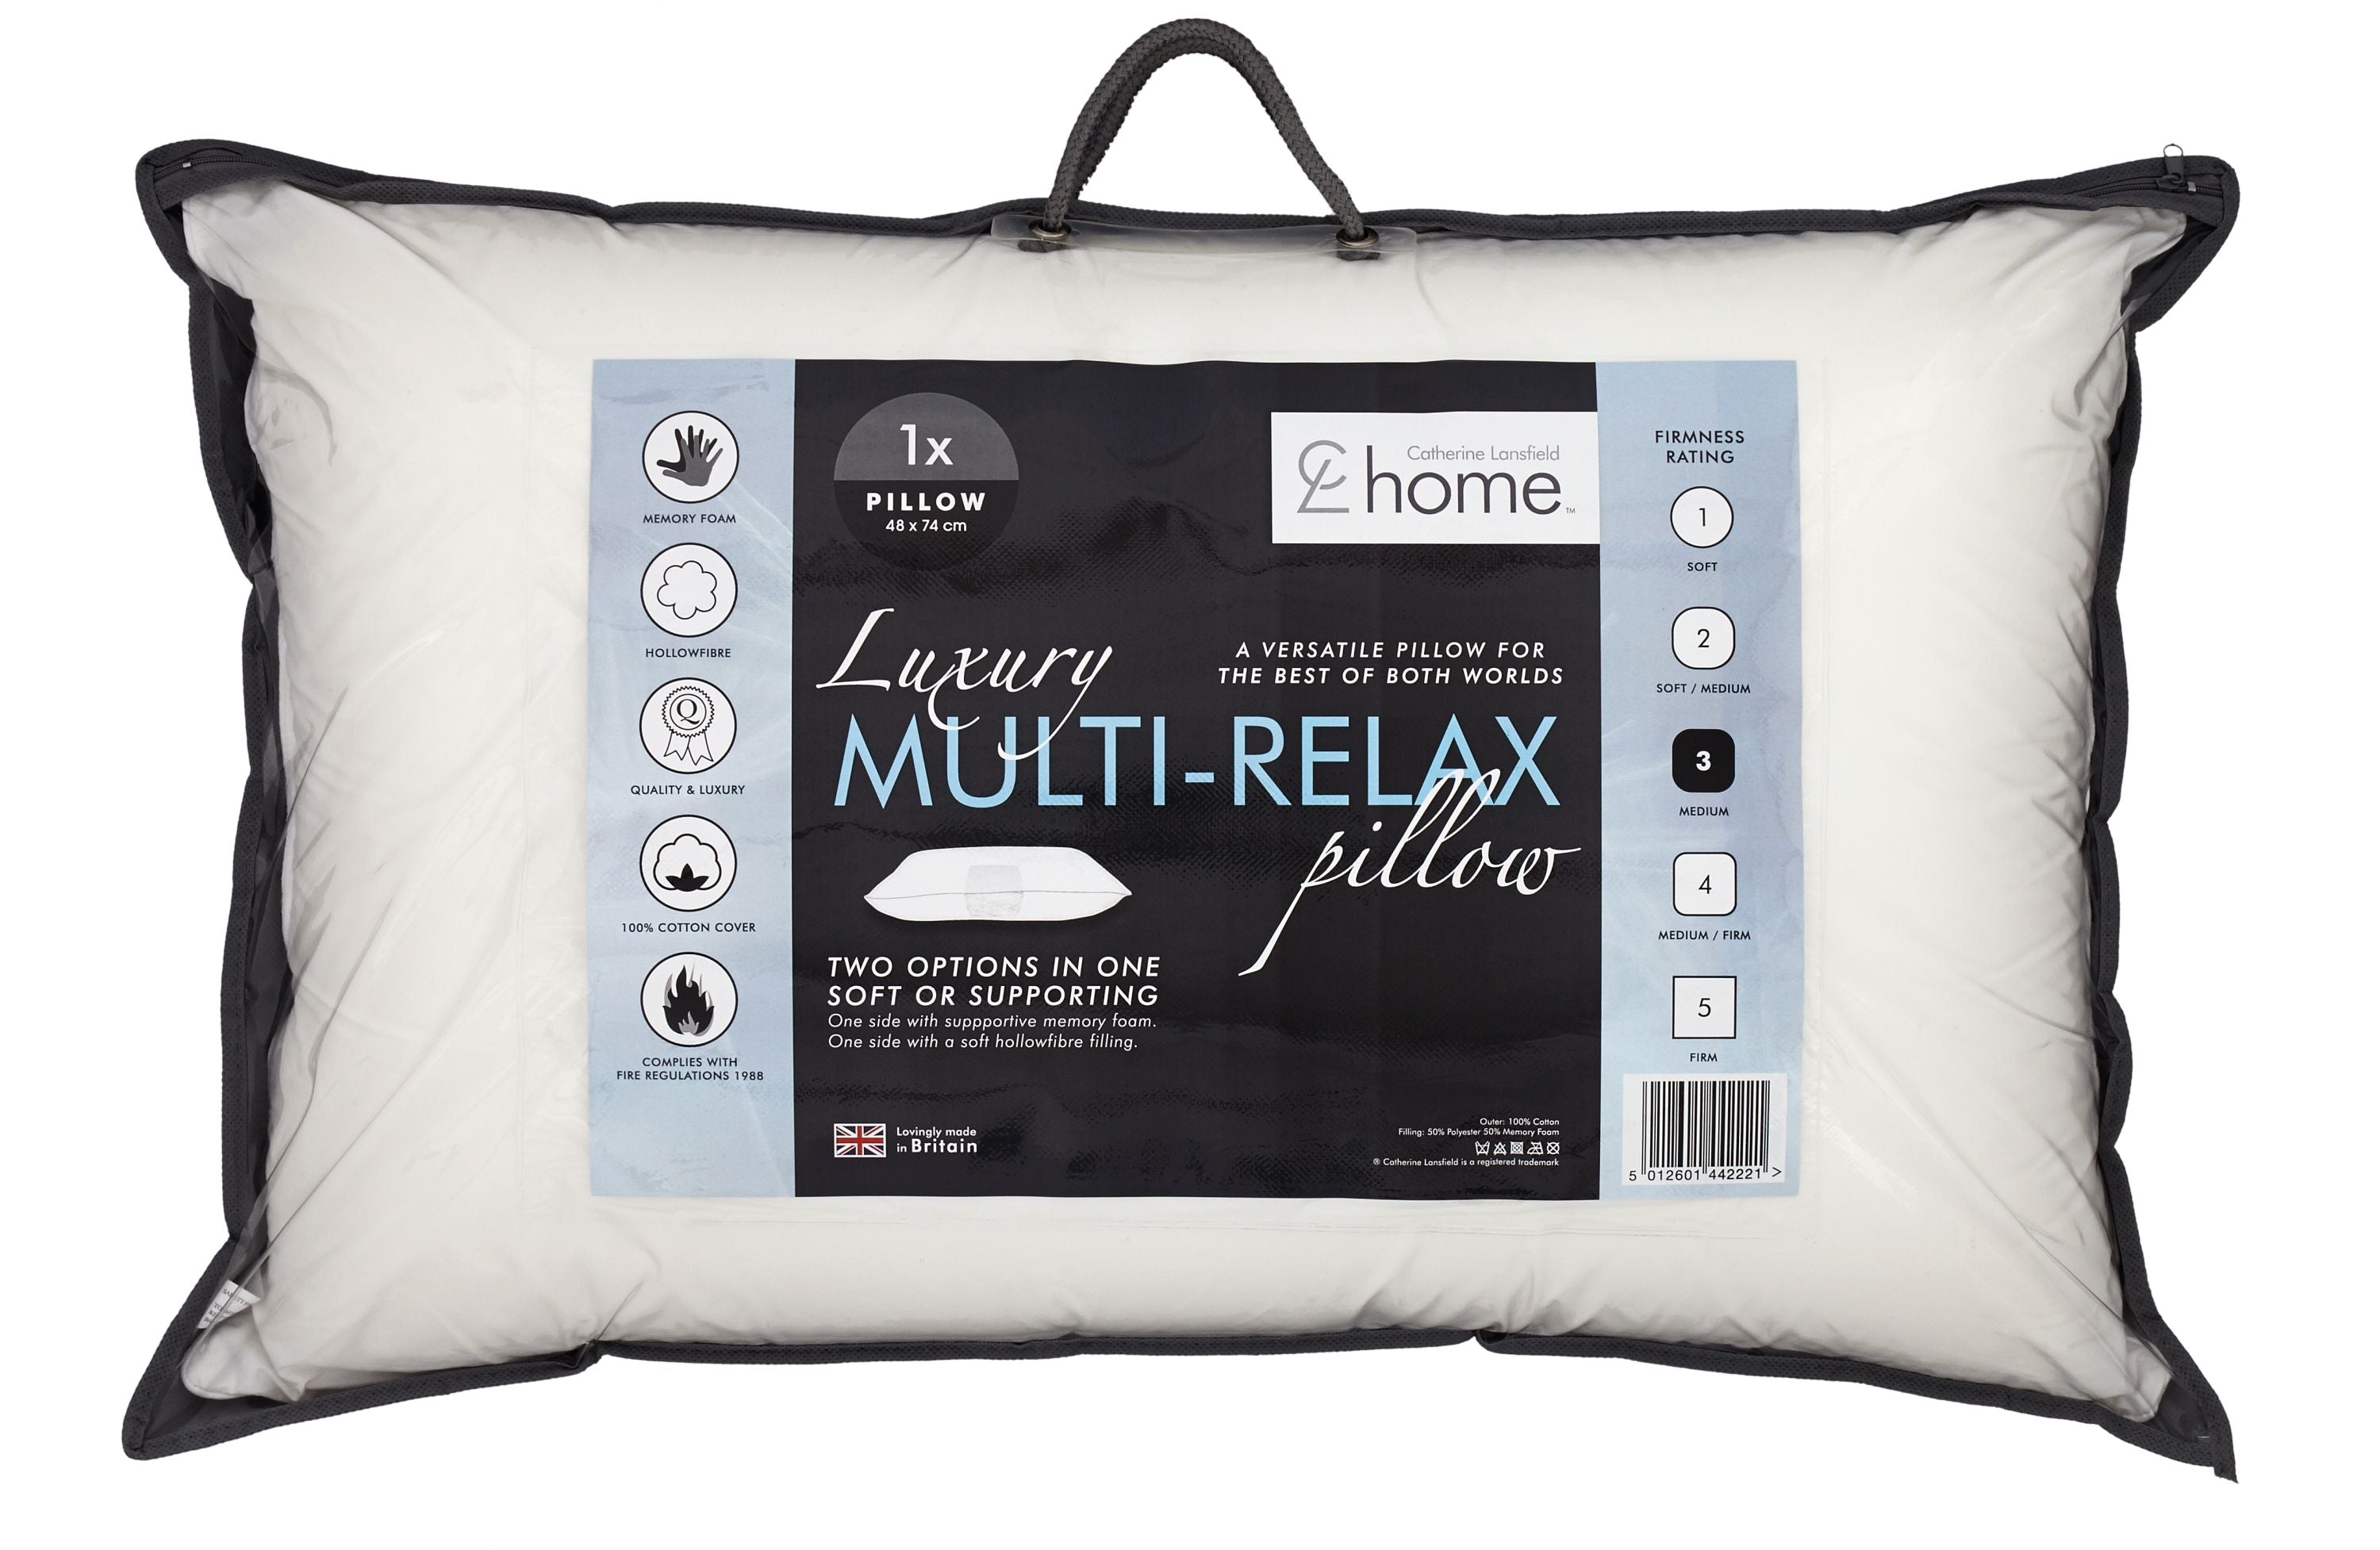 Luxury Multi Relax Pillow 48 x 74cms UK Size